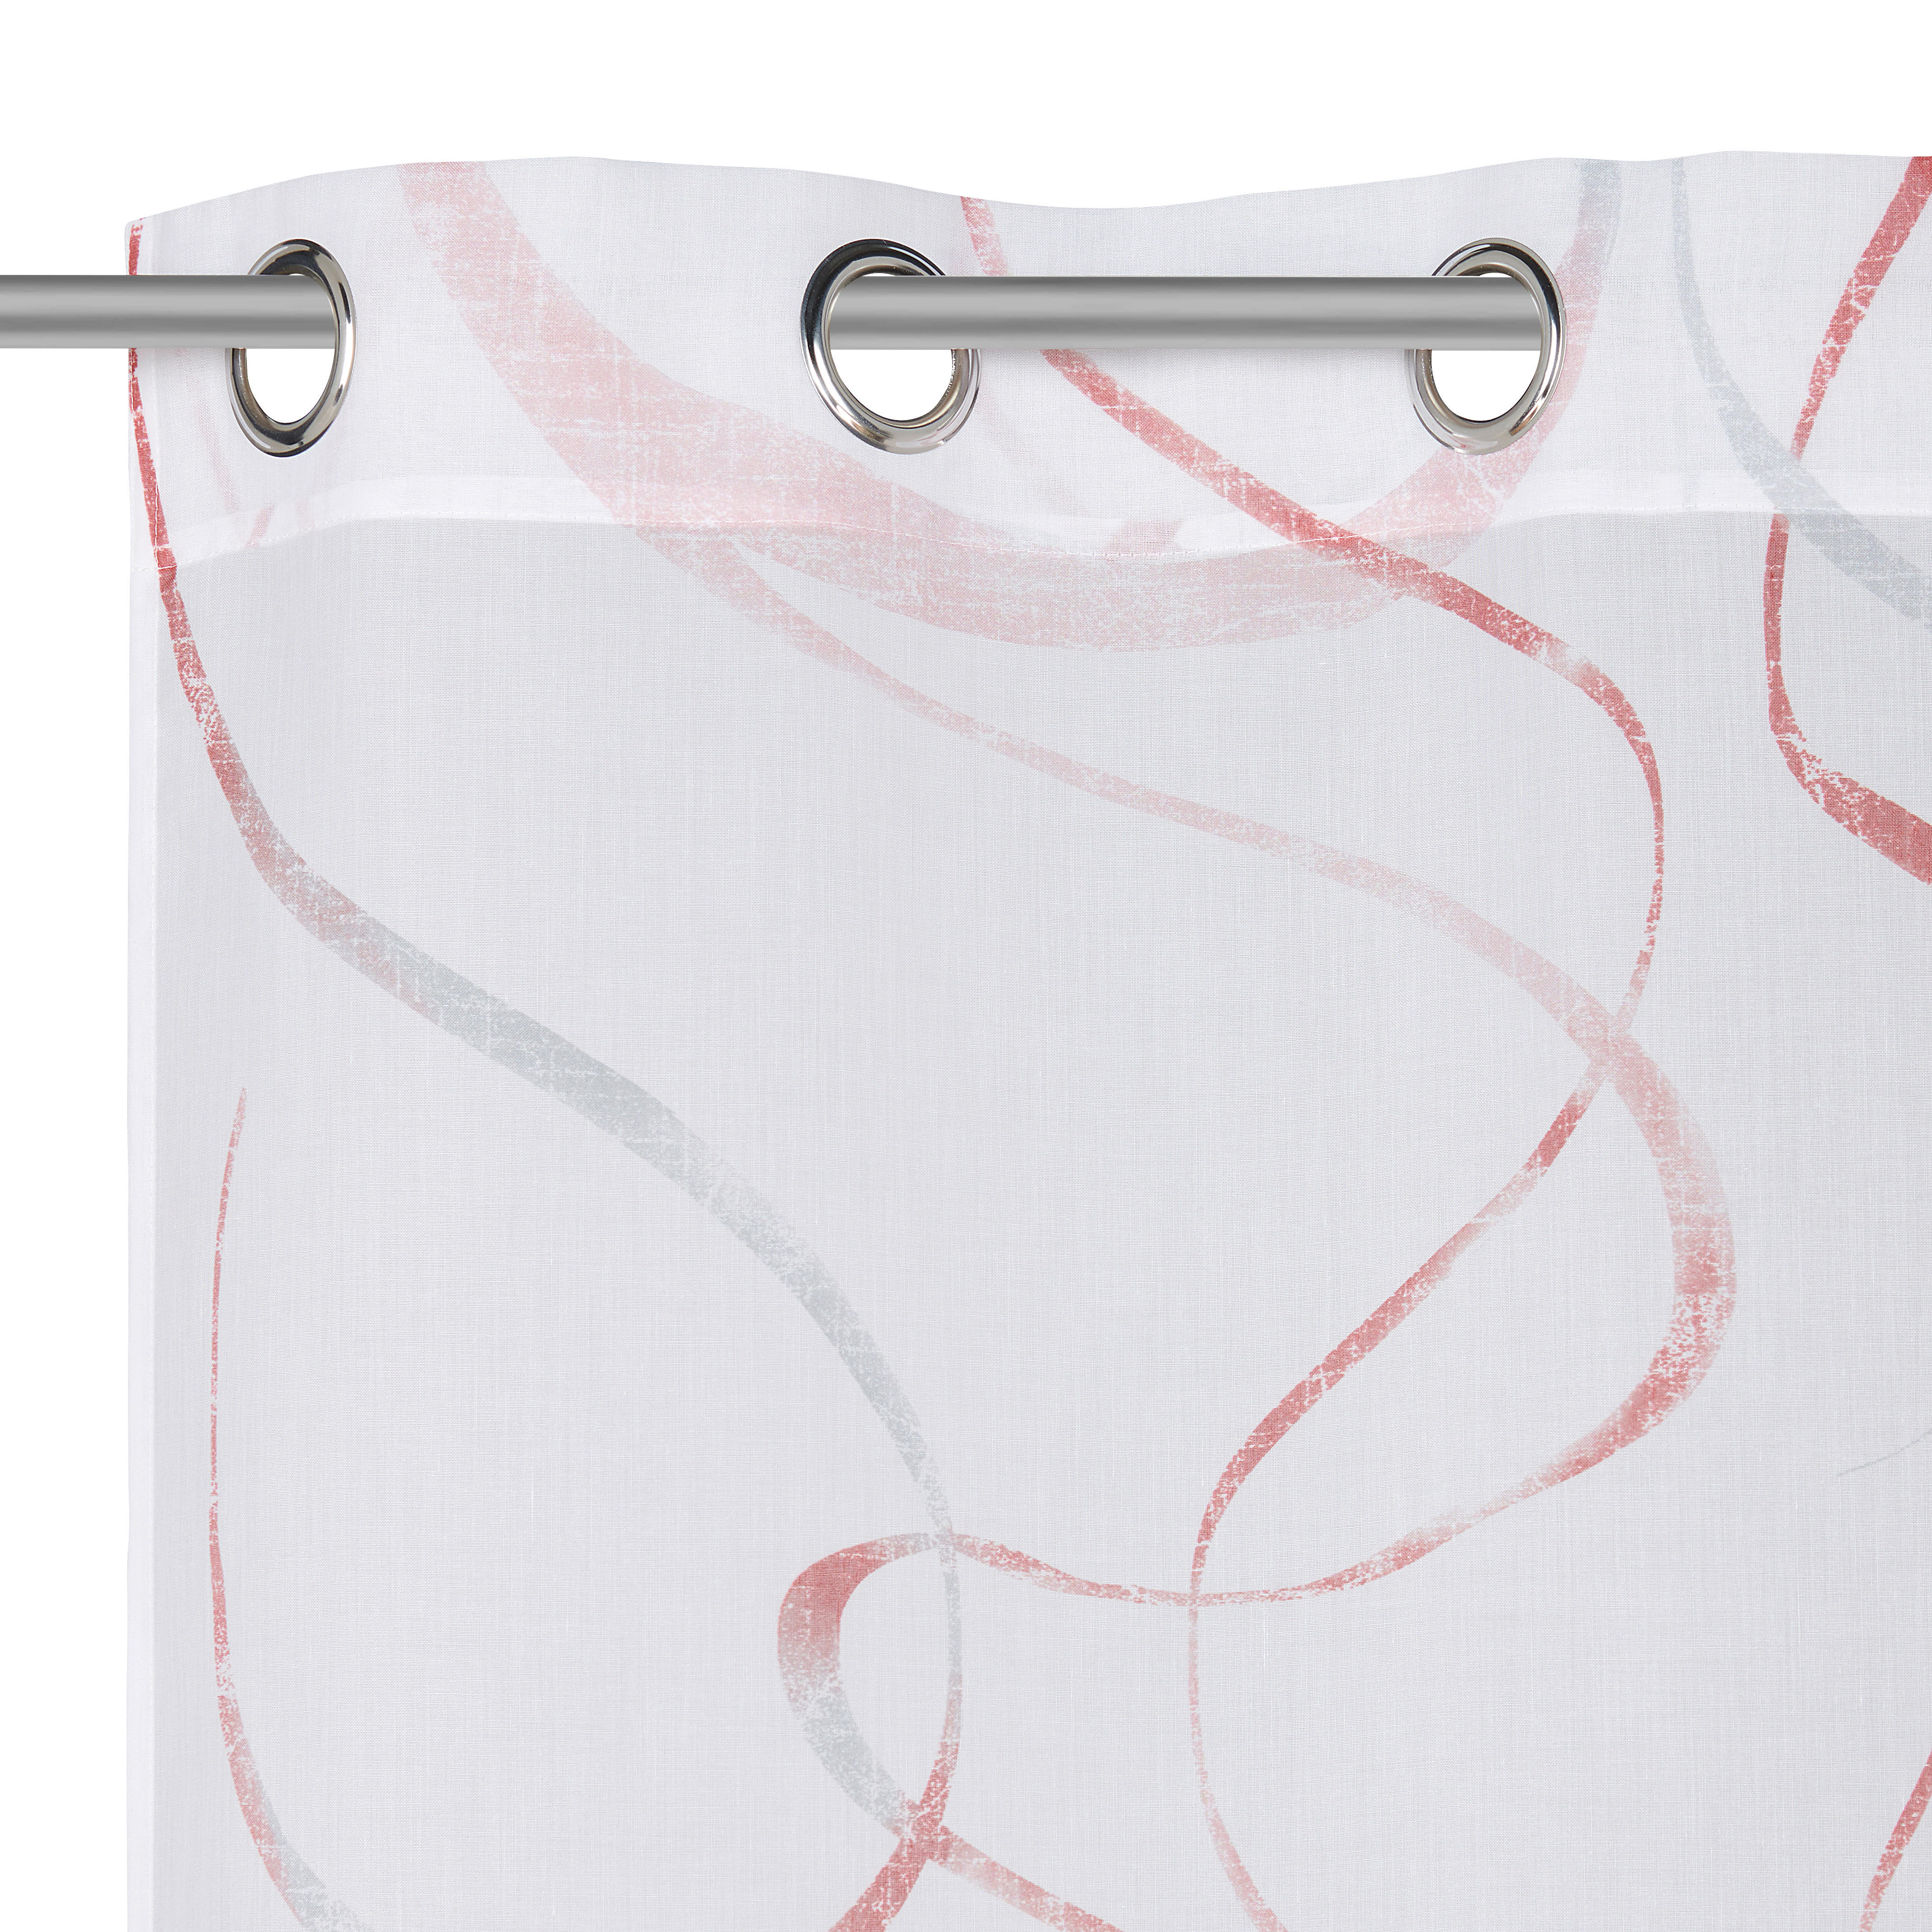 ÖLJETTLÄNGD halvtransparent  - röd/grå, Klassisk, textil (140/245cm) - Esposa